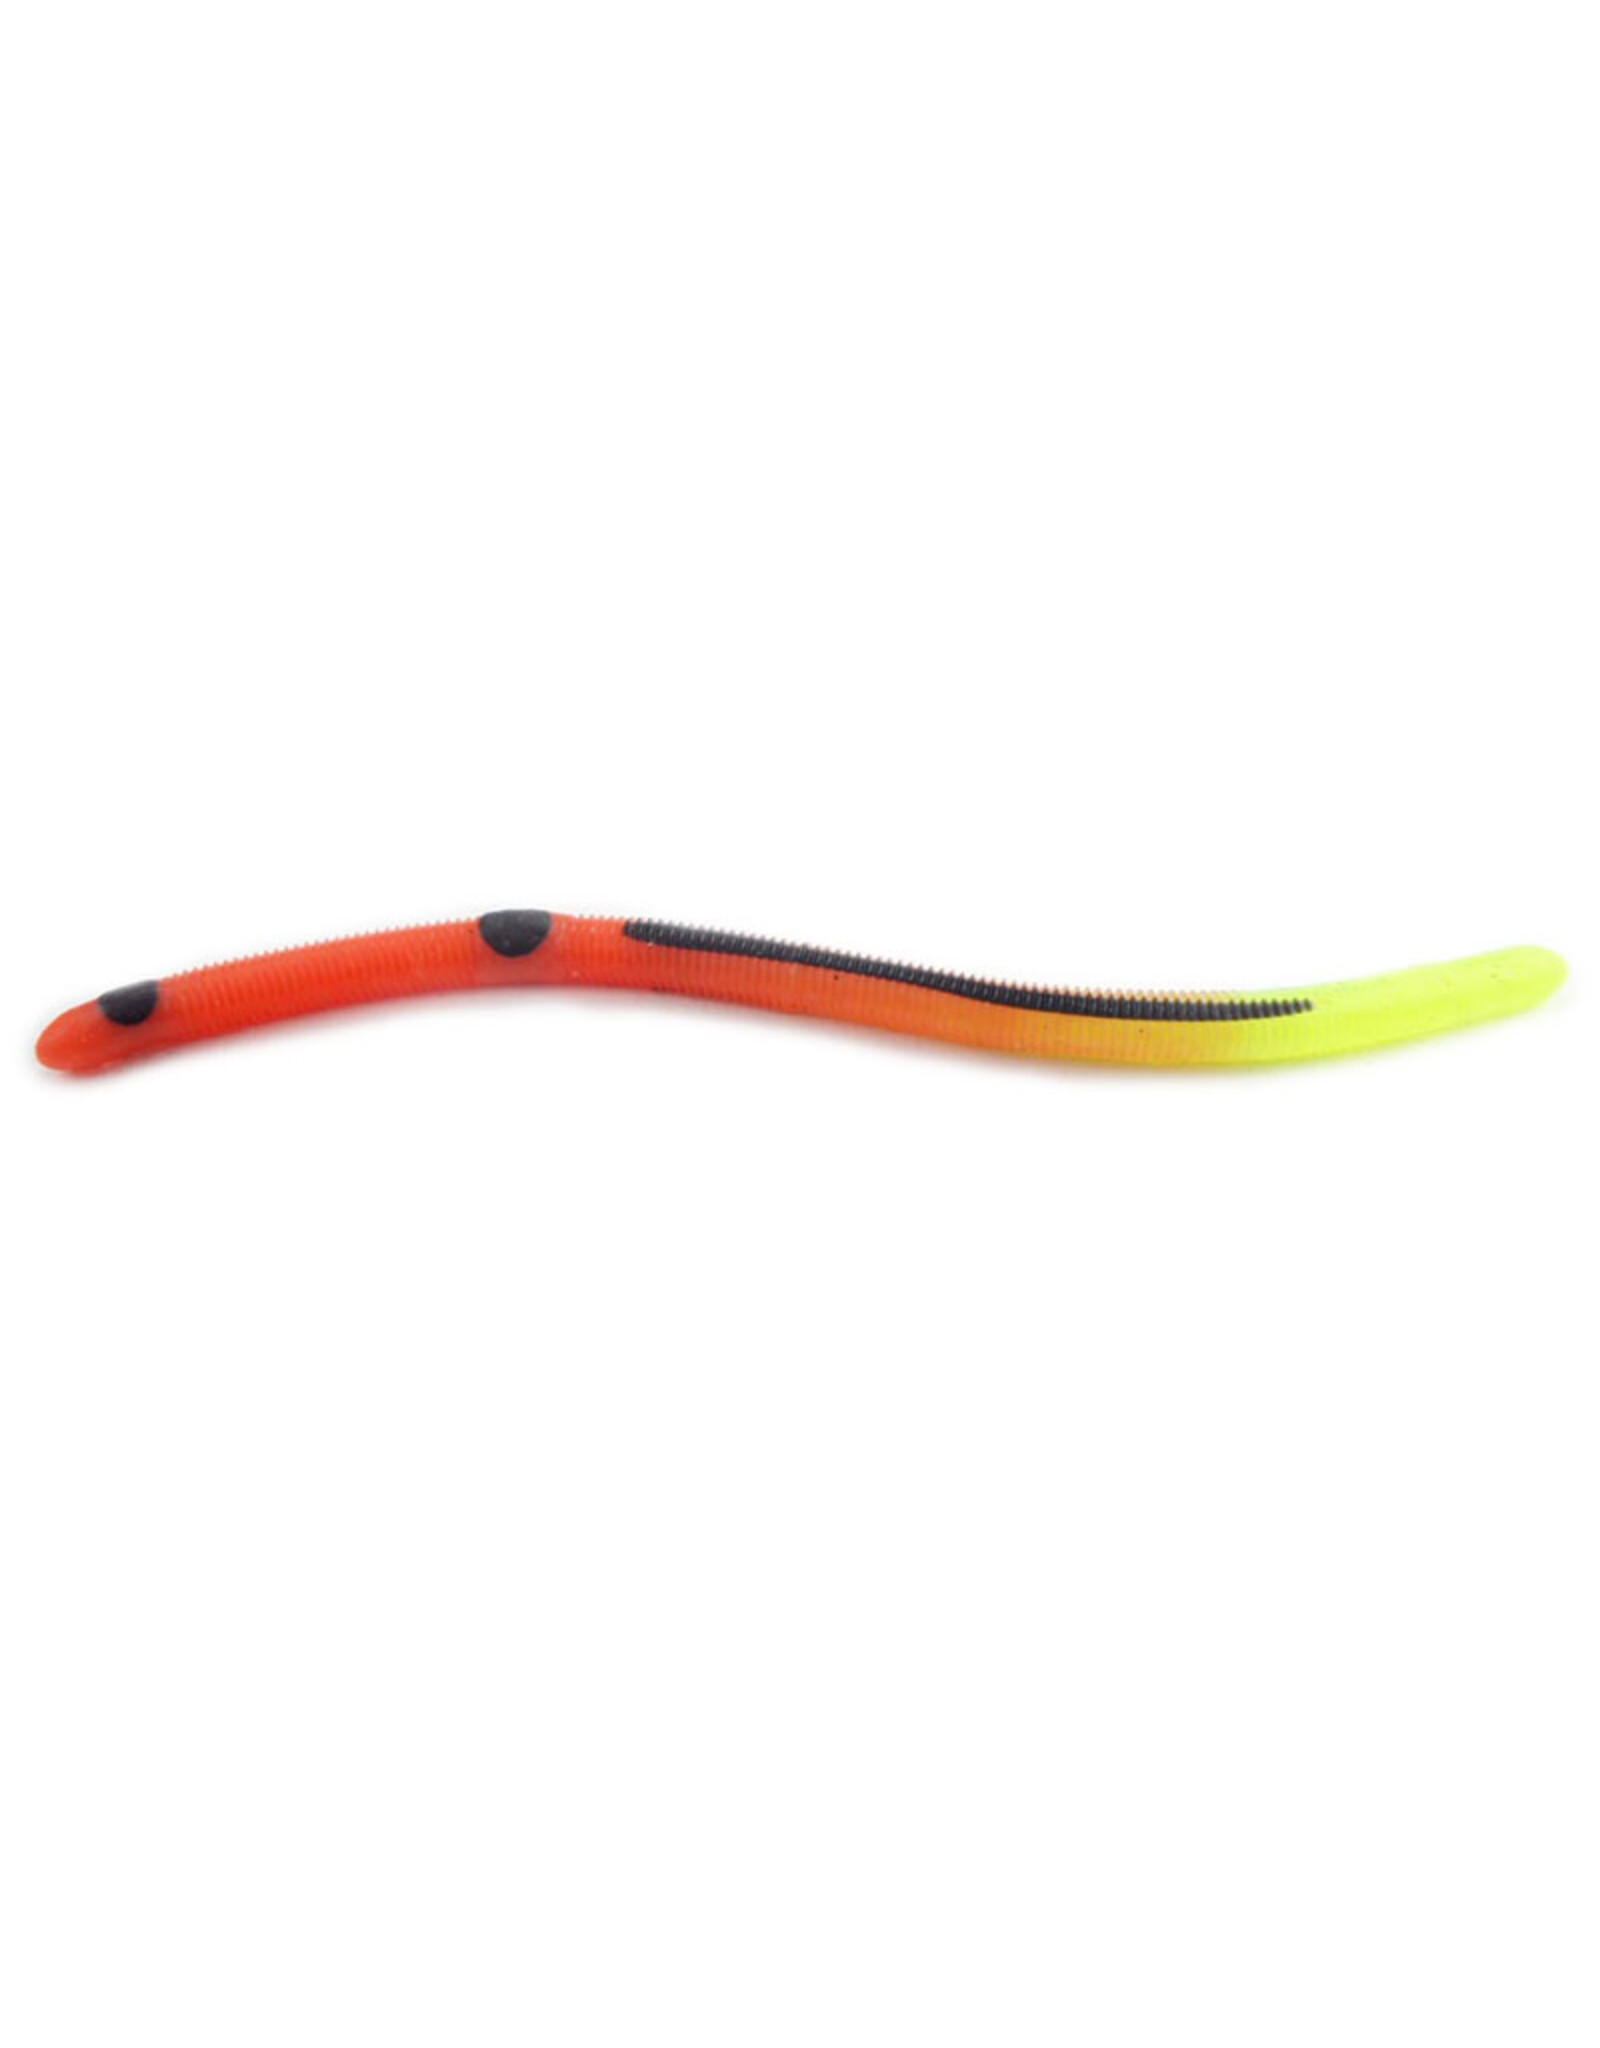 Kellys Fire Tail Pre-Rigged Plastic Worm 5 1/2 3 #6 Hooks - Bronson